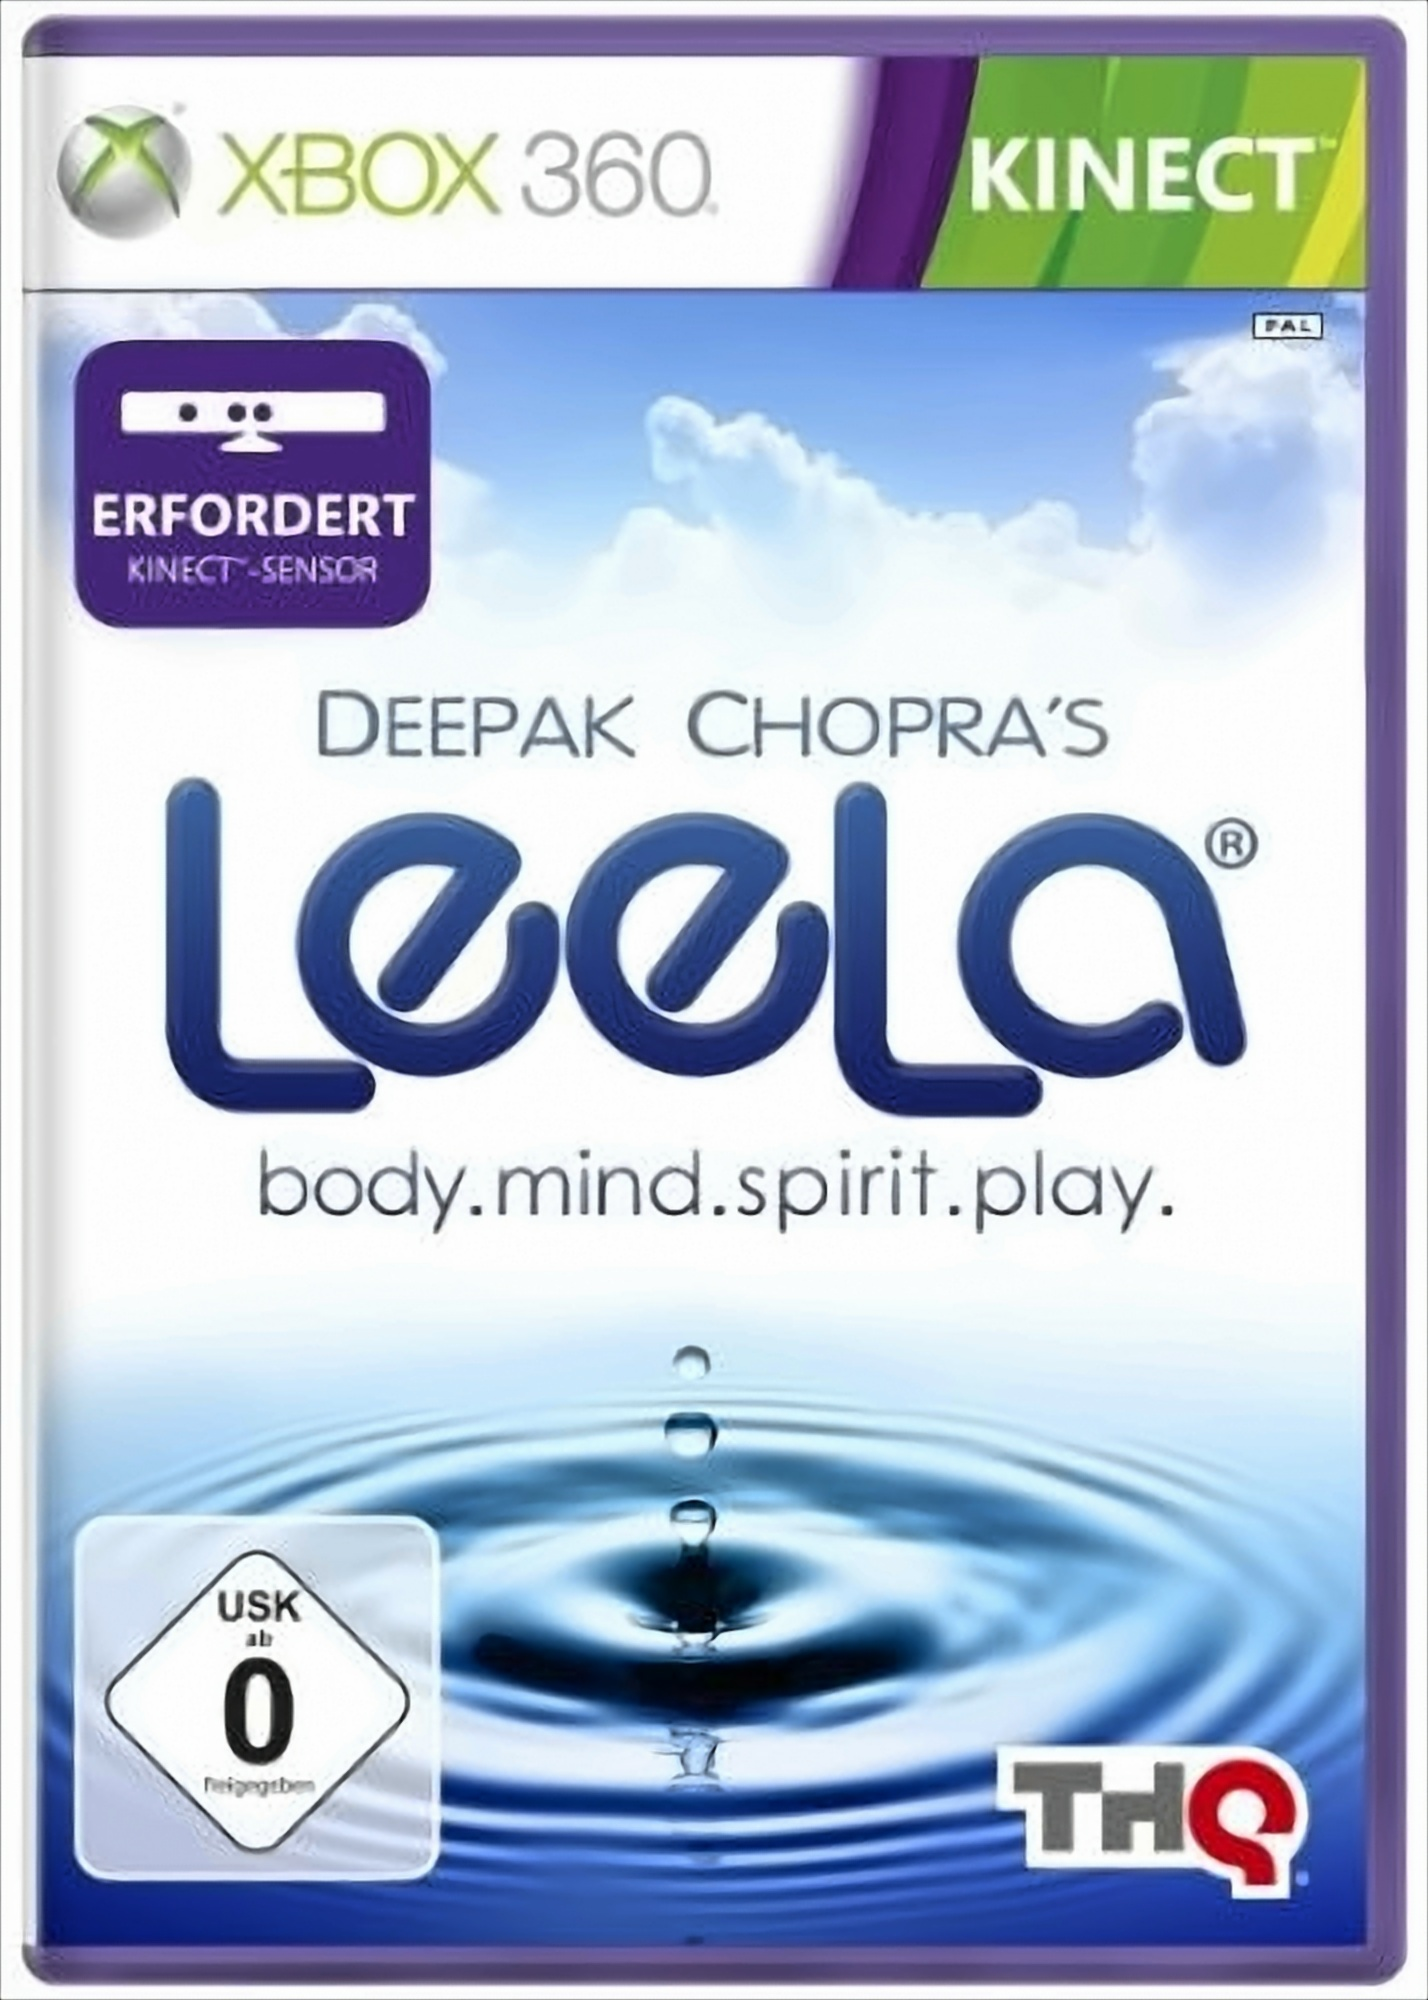 Entspannung [Xbox Chopra\'s Deepak Leela Kinect & - - 360] Meditation